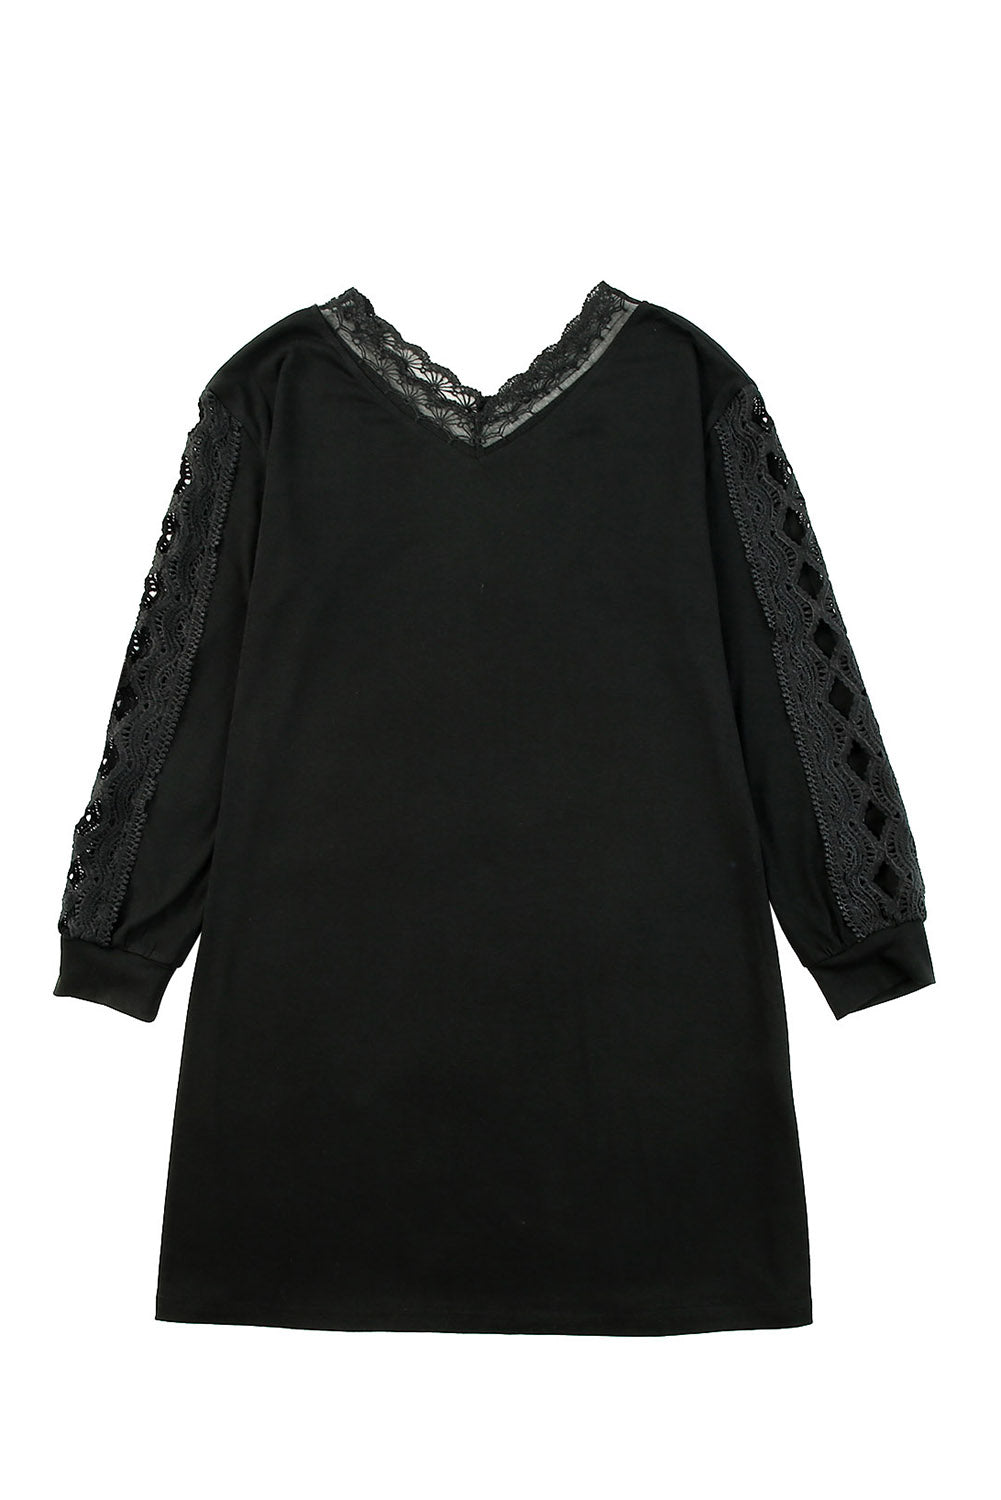 Black Lace Splicing Hollow Out Mini Womens Dress - US2EInc Apparel Plug Ltd. Co